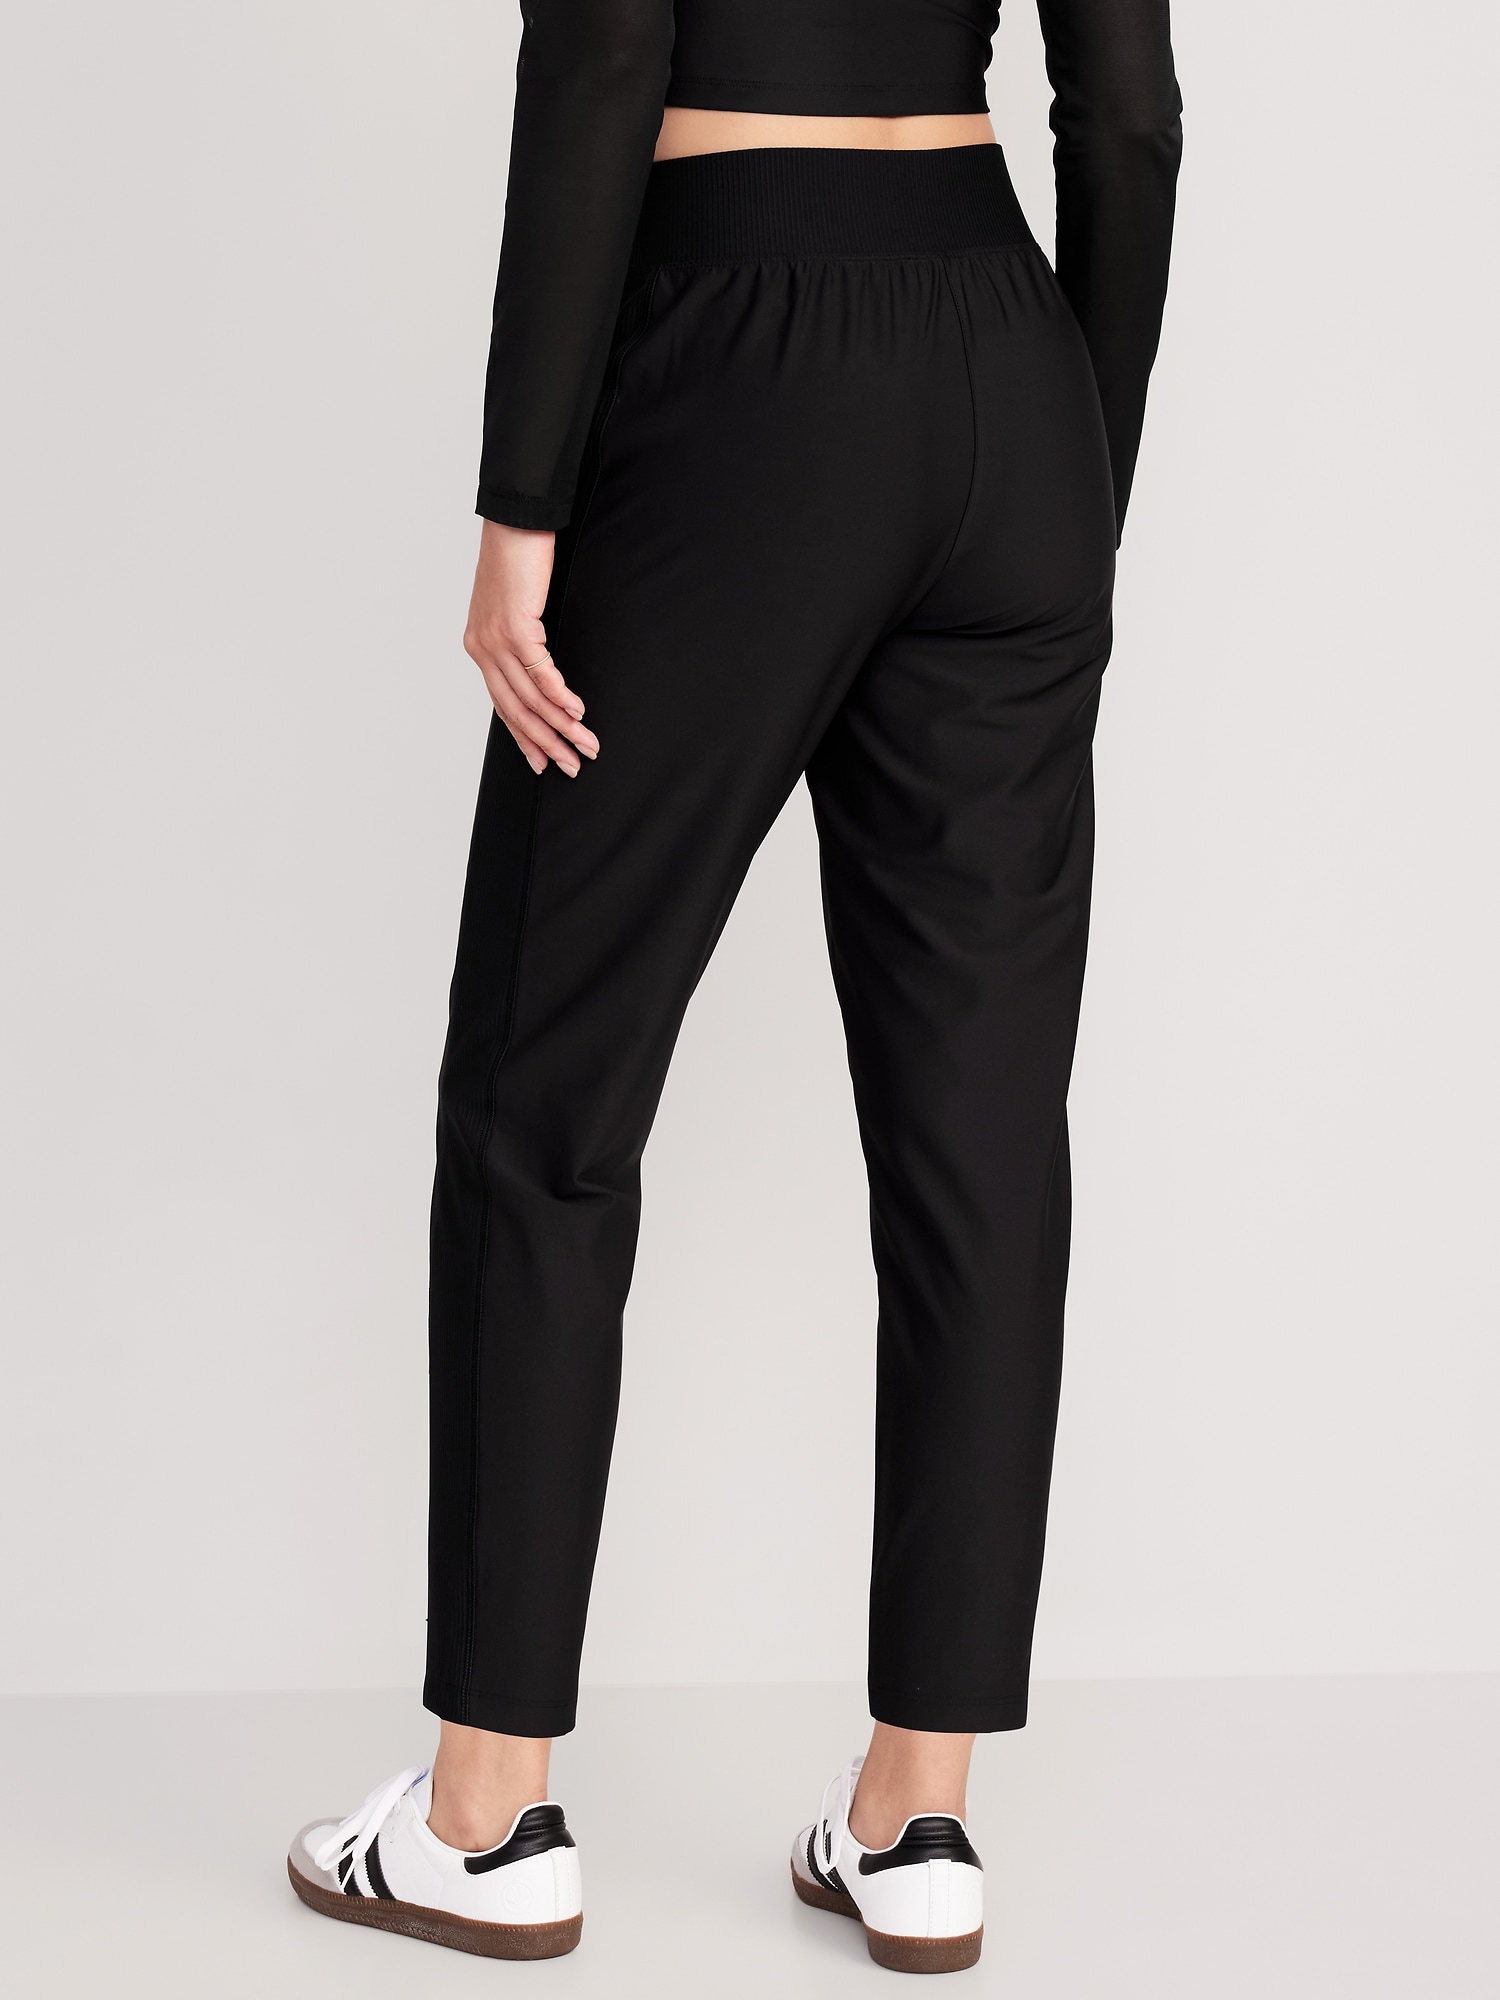 Michael Kors Women's Wool Blend High Rise Pleated Dress Pants Black Si -  Shop Linda's Stuff